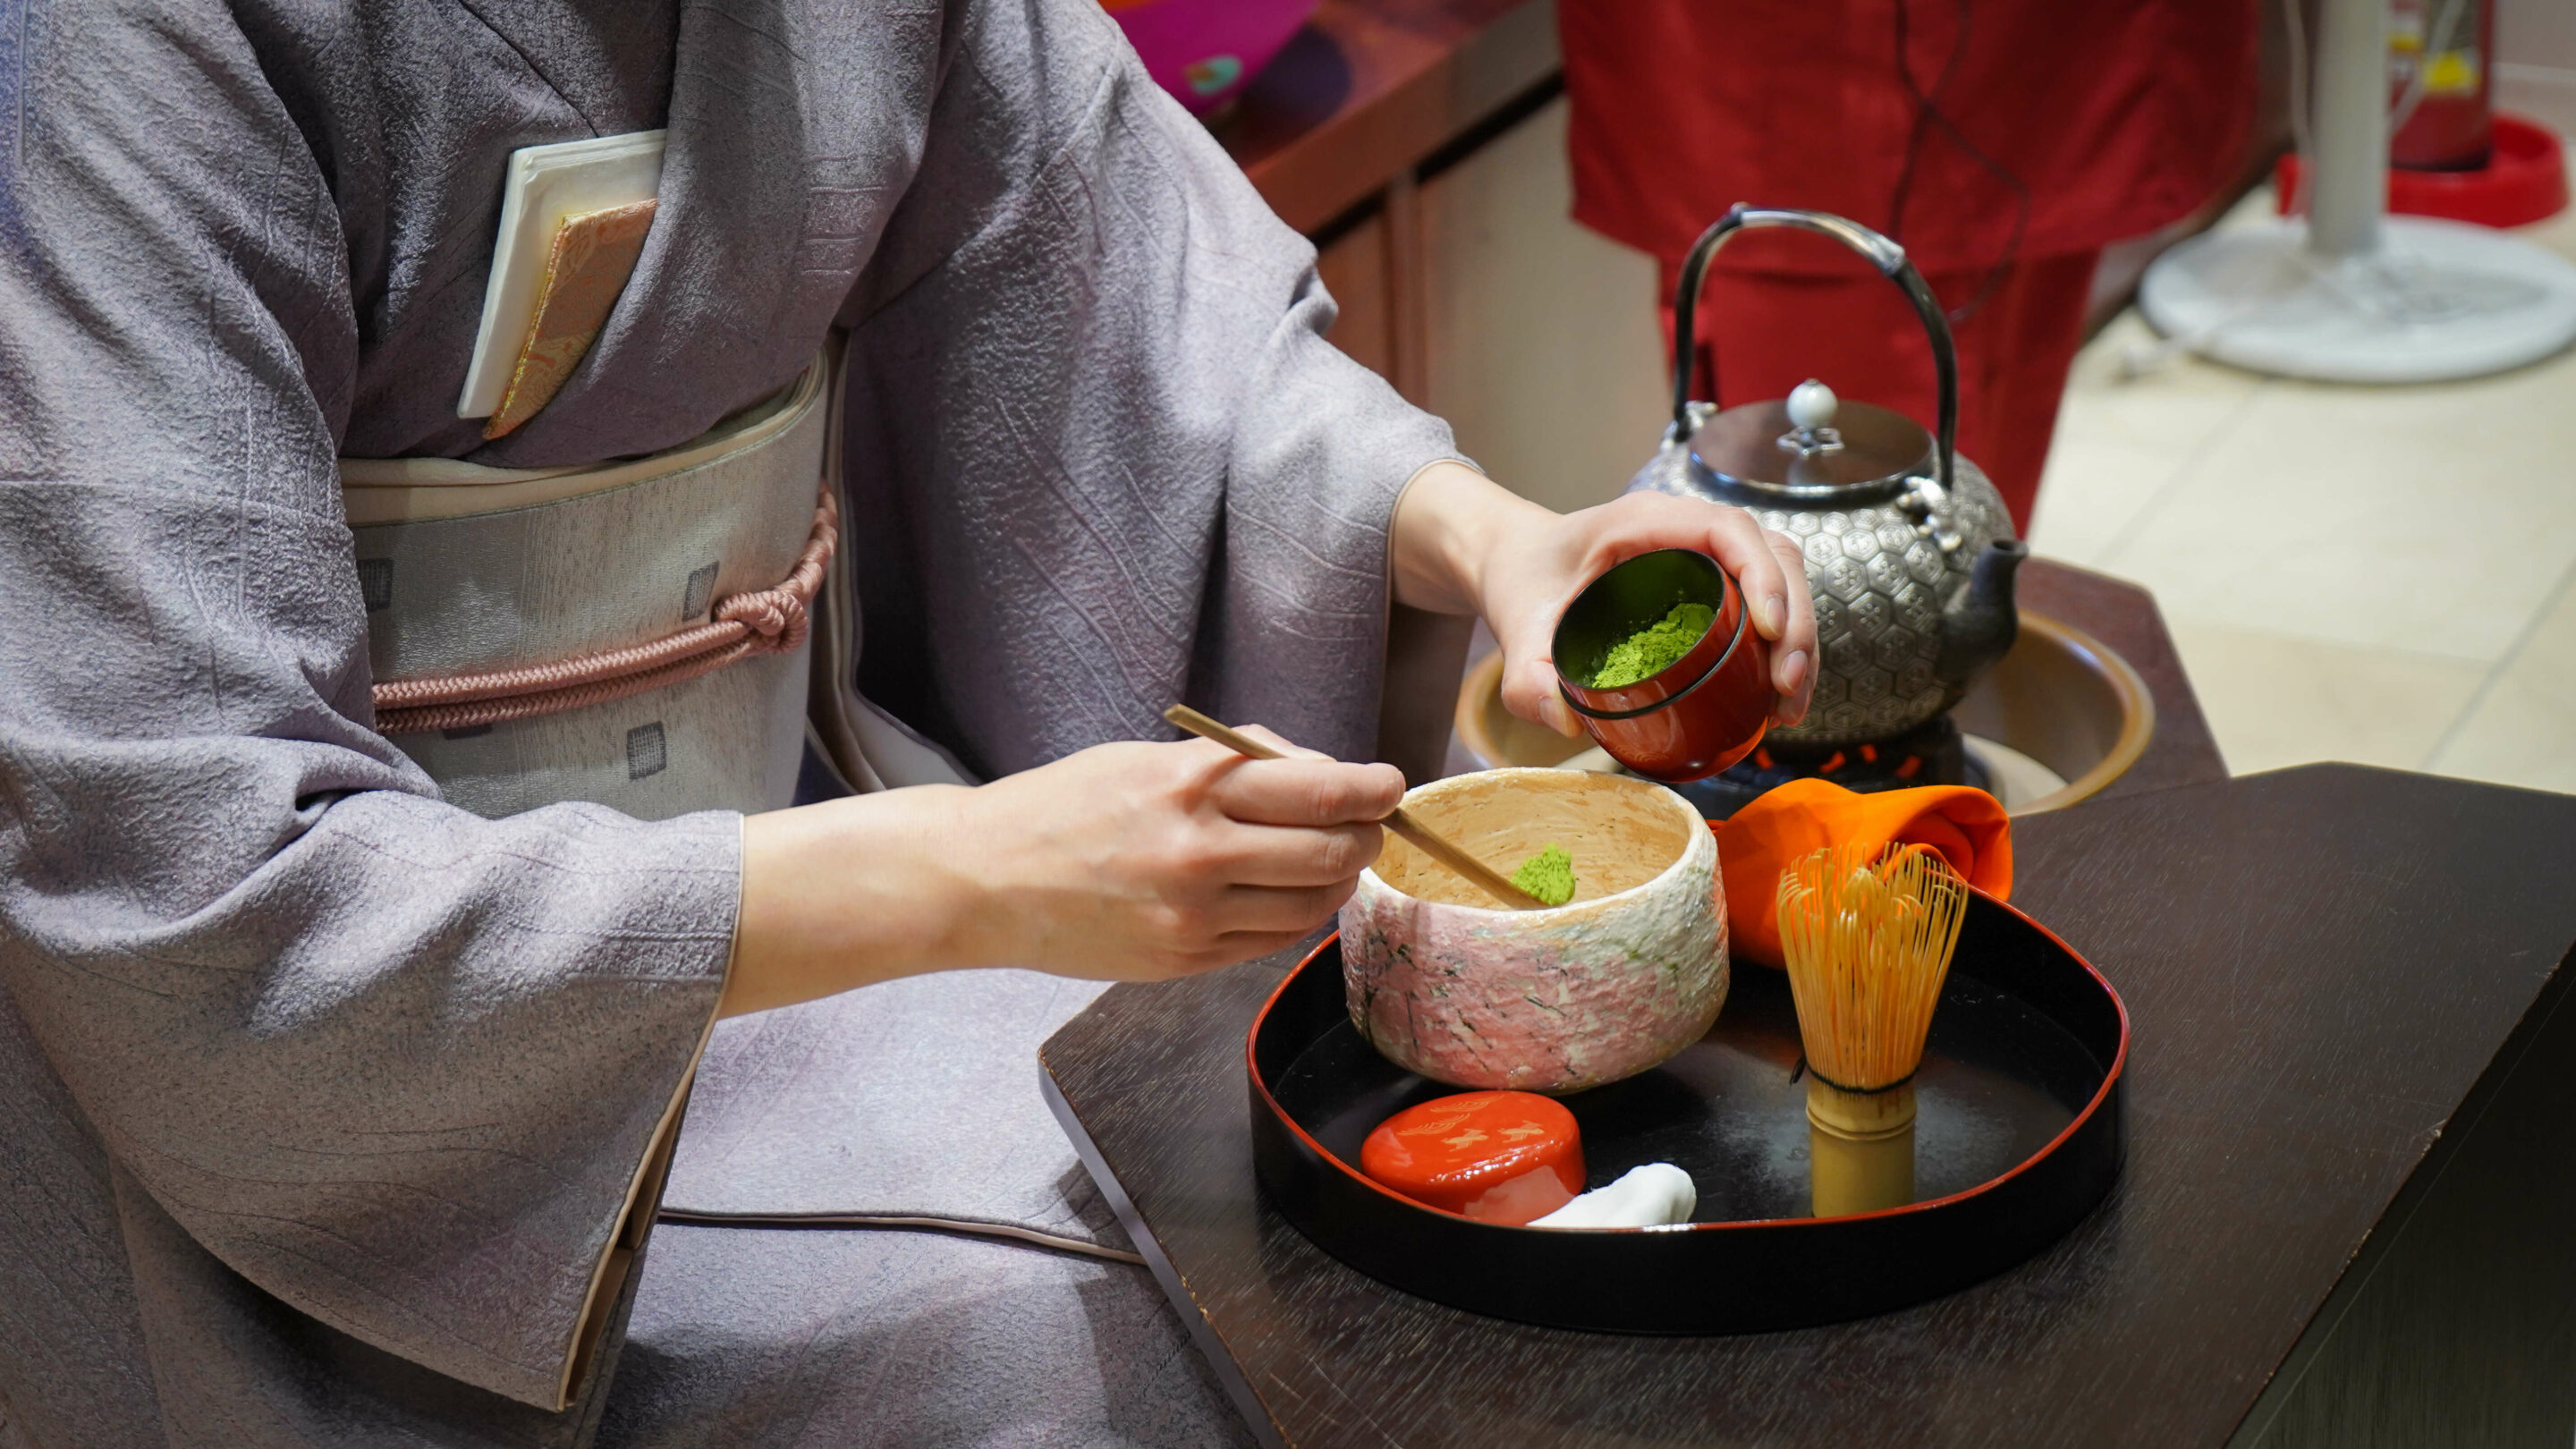 Japanese matcha tea being served